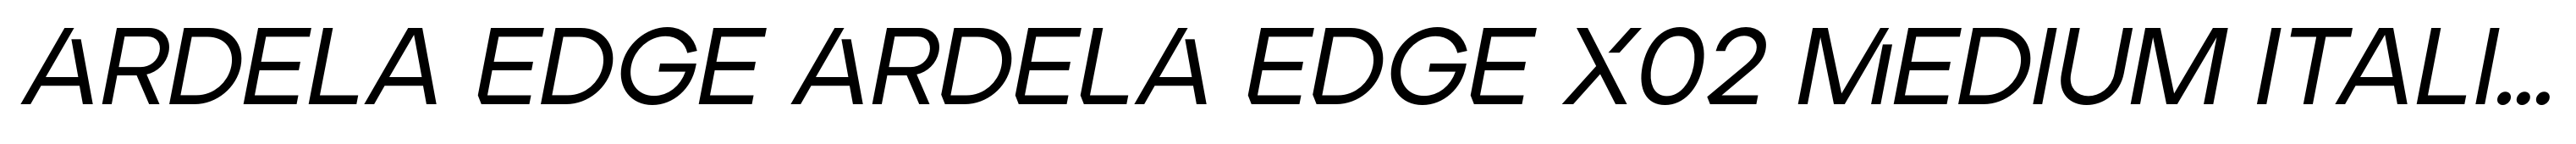 Ardela Edge ARDELA EDGE X02 Medium Italic